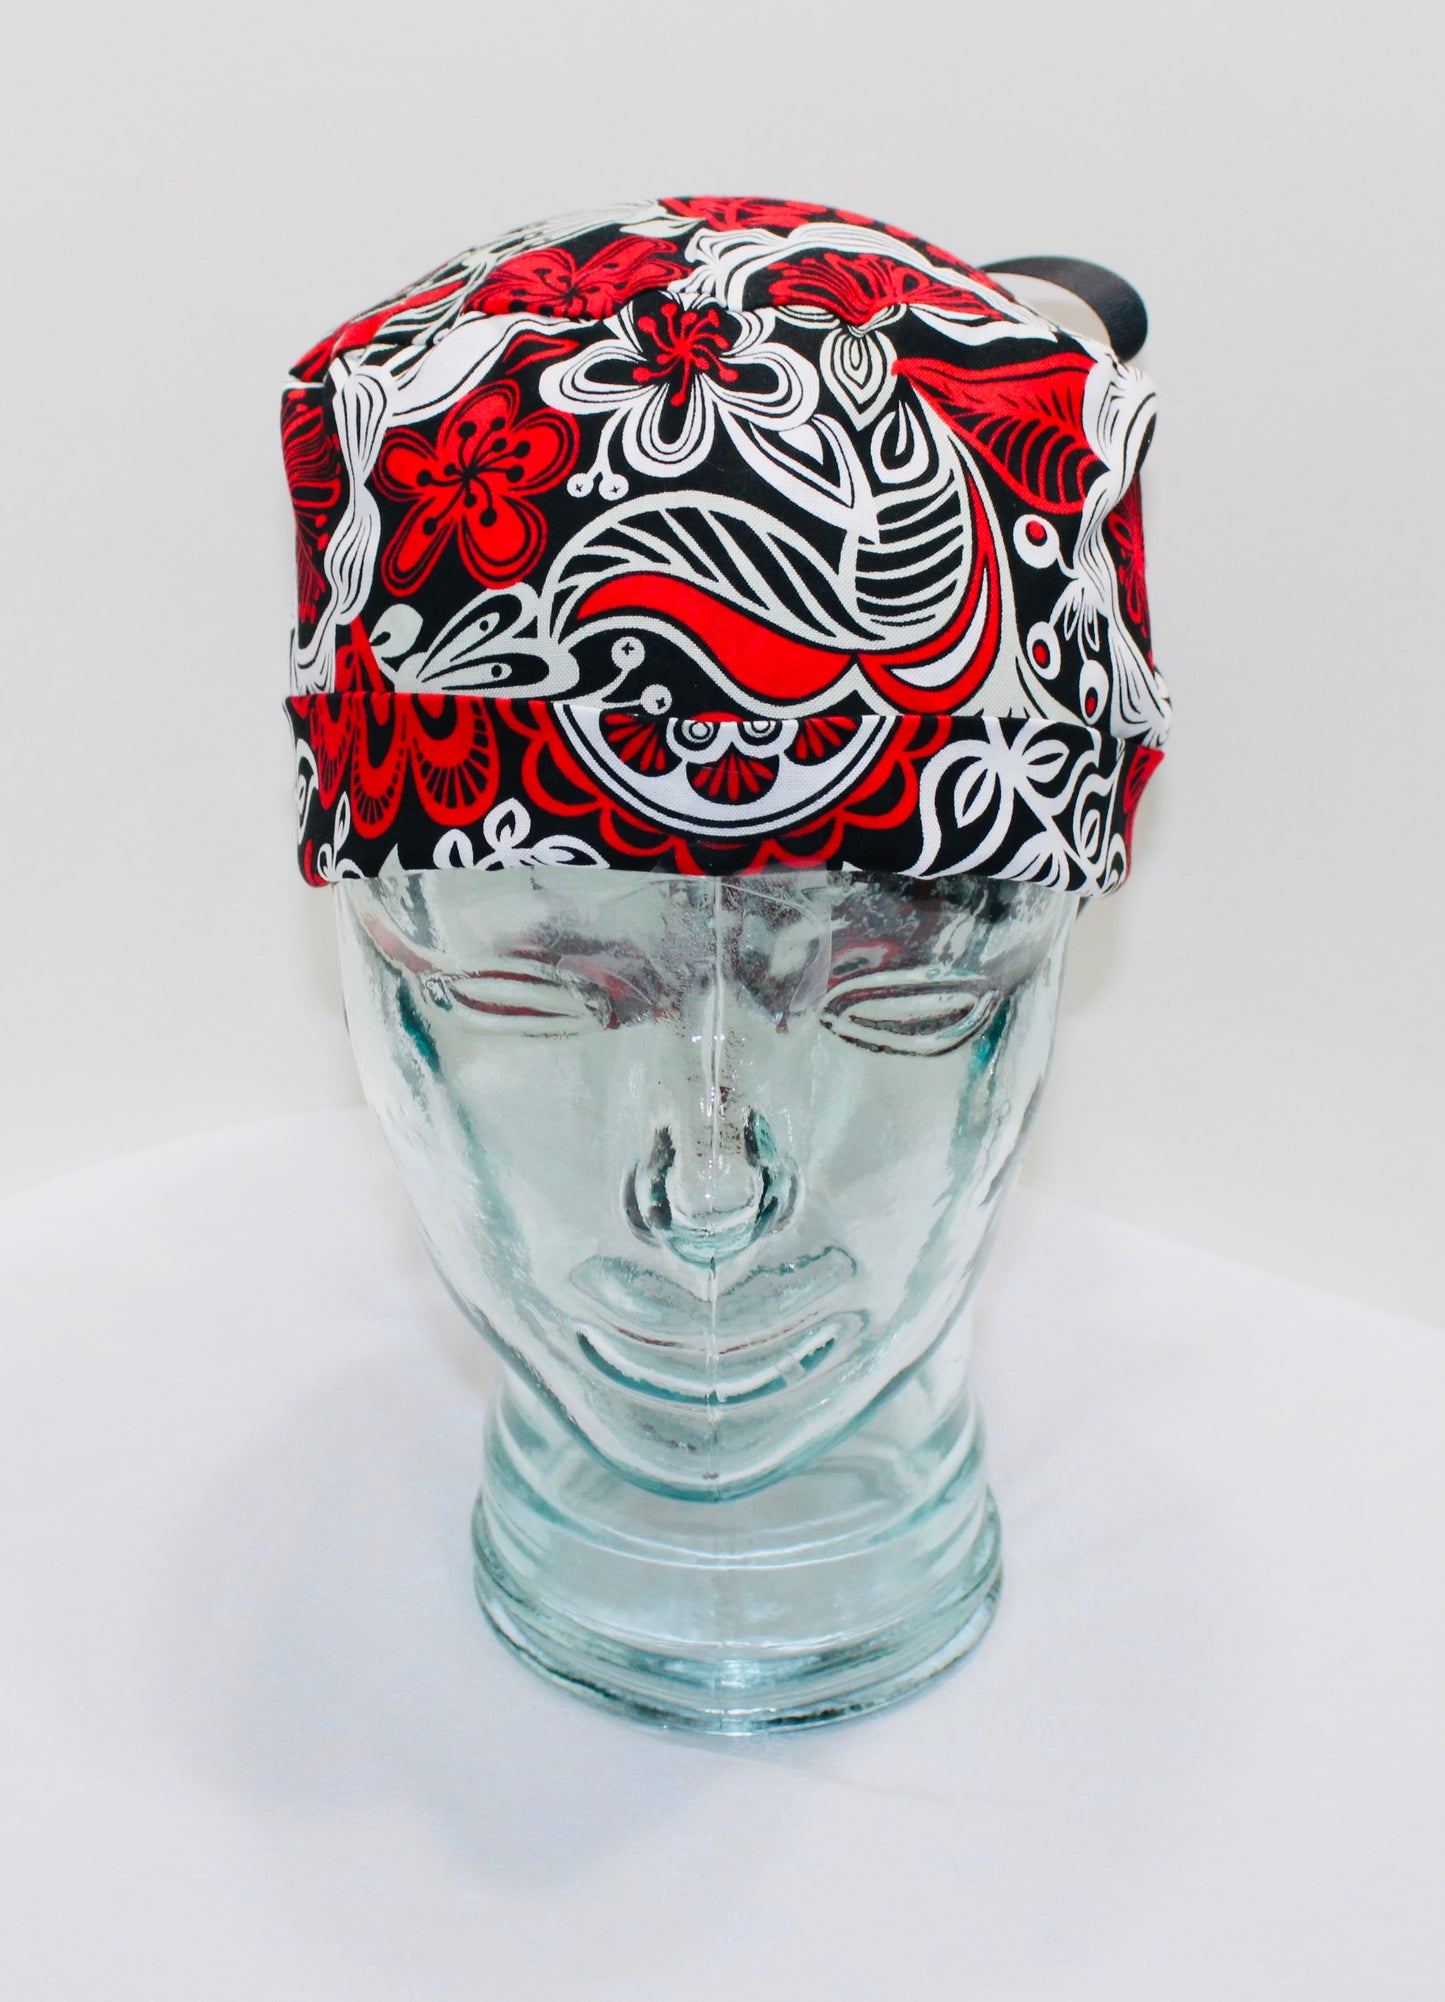 Ponytail Scrub Hat-Red Floral - Ava Greys Designs